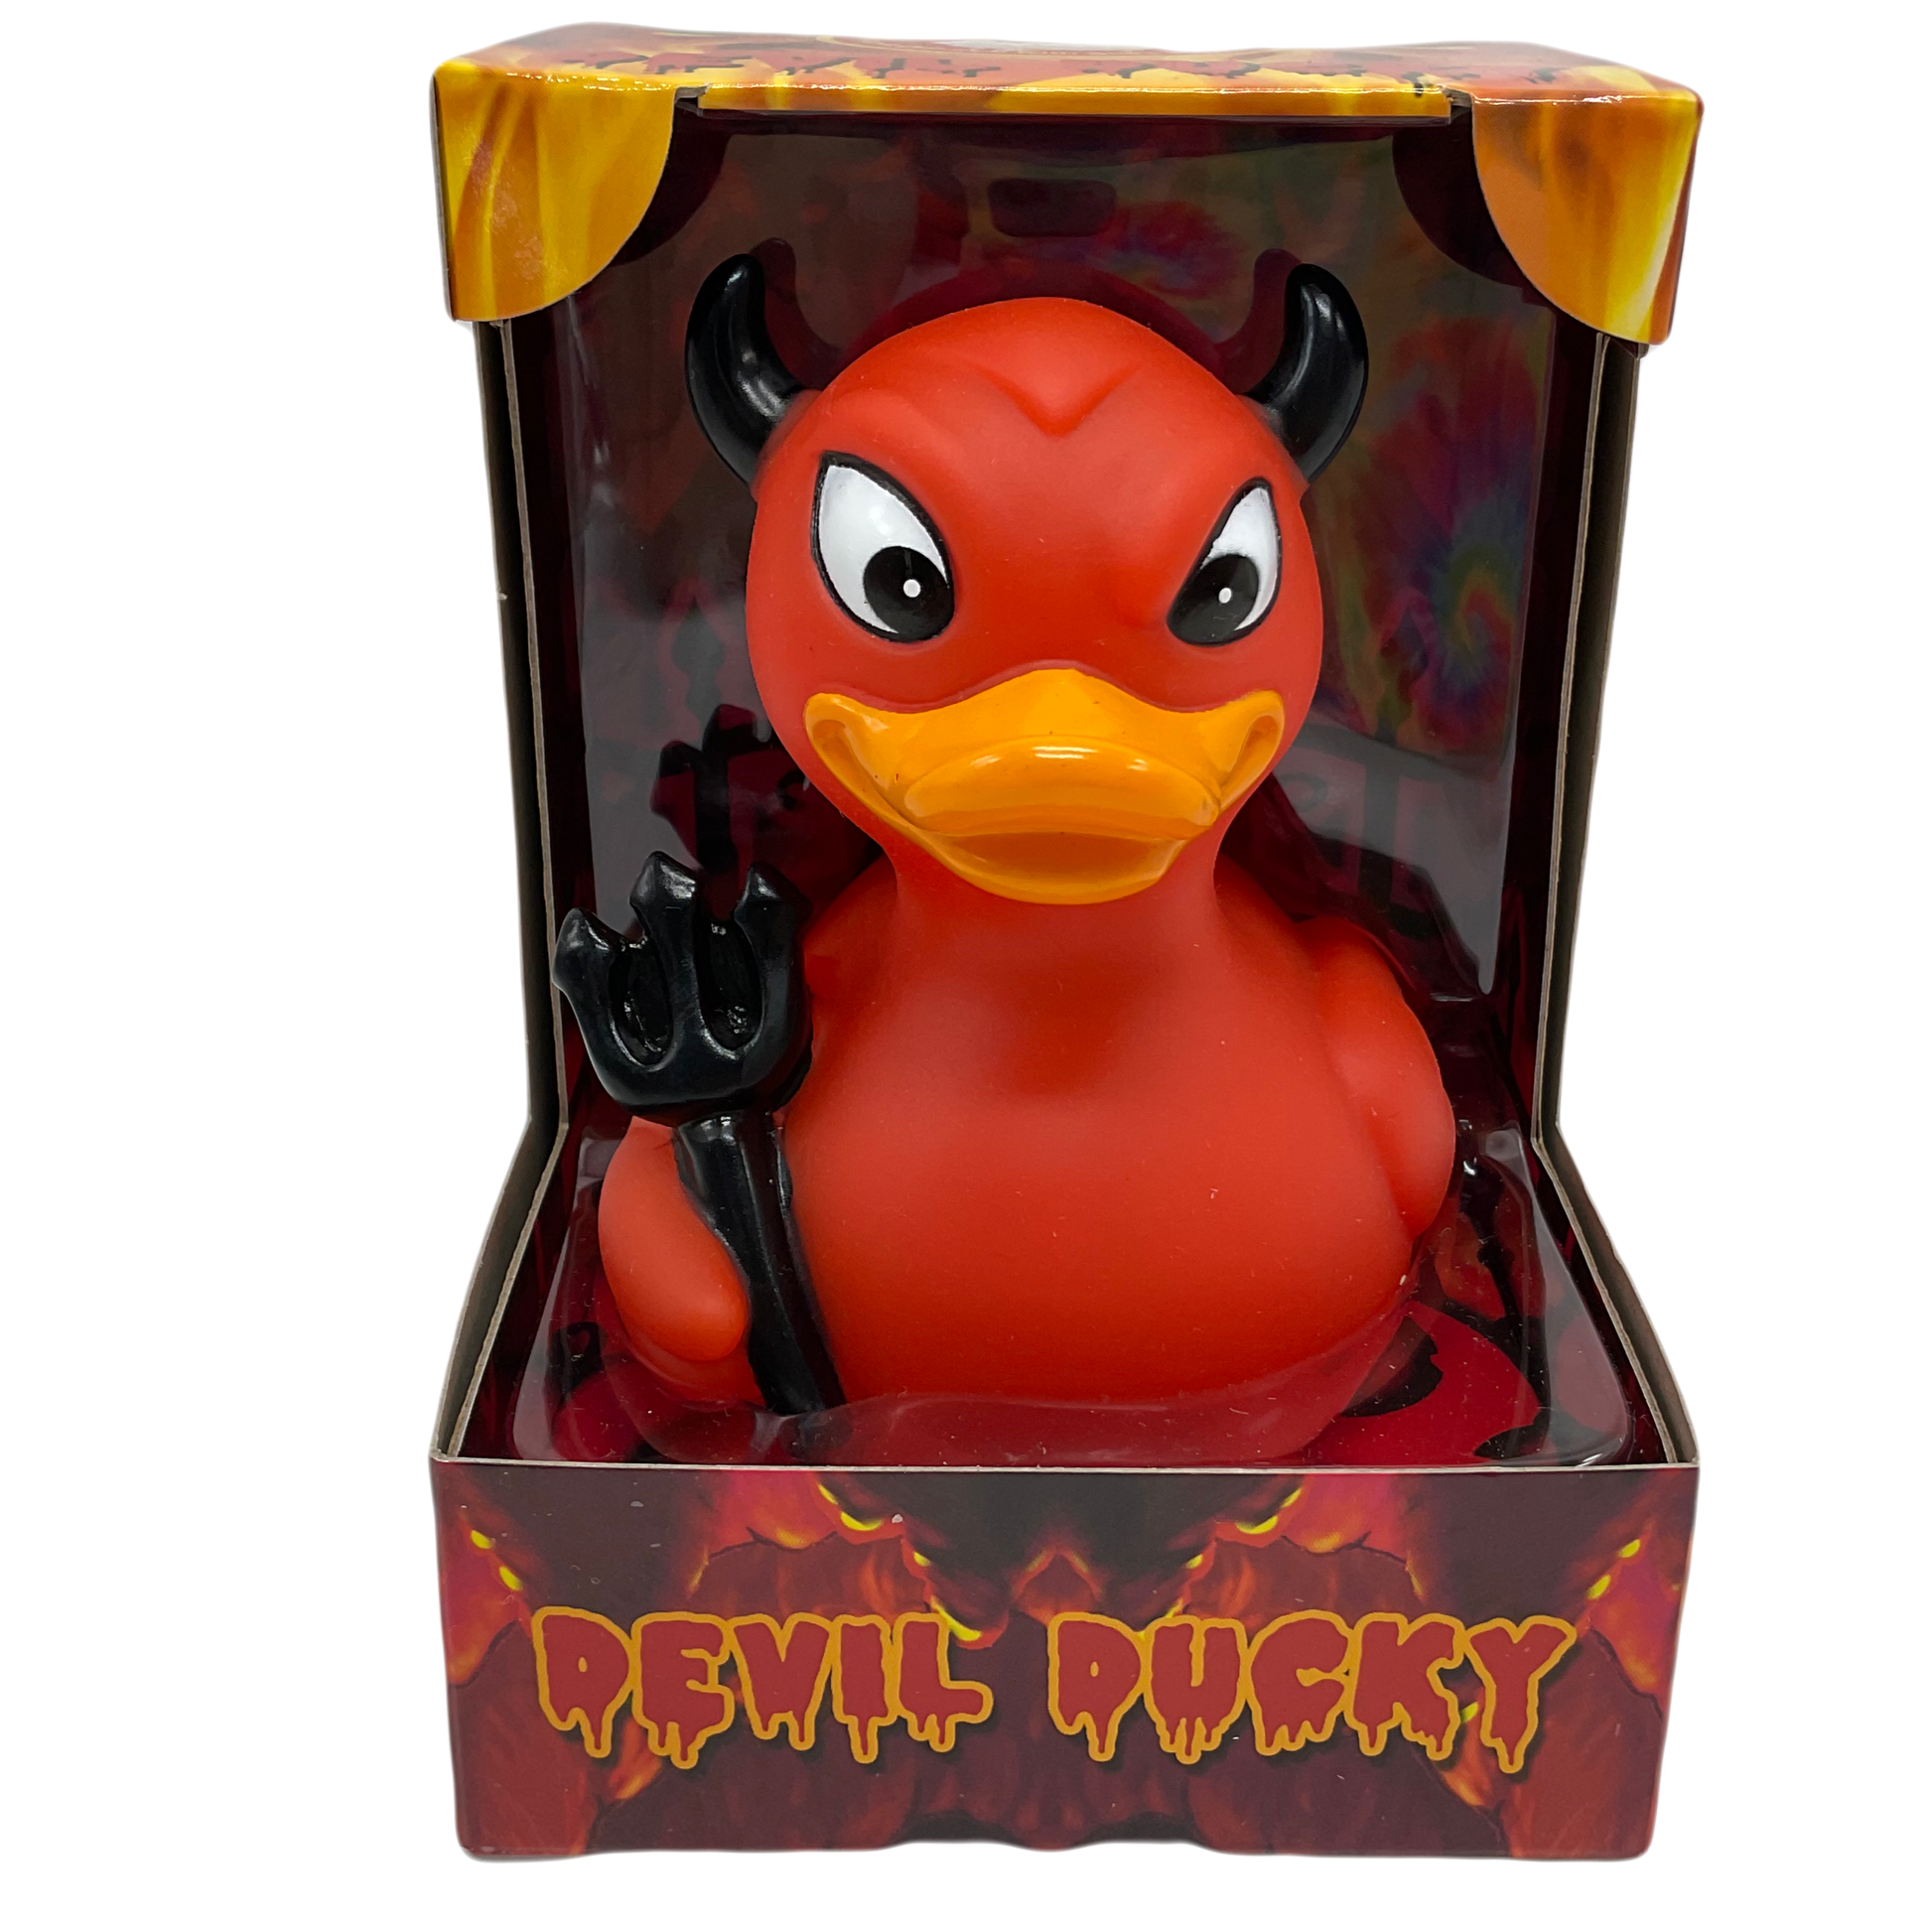 Devil Ducky Celebriduck Rubber Duck